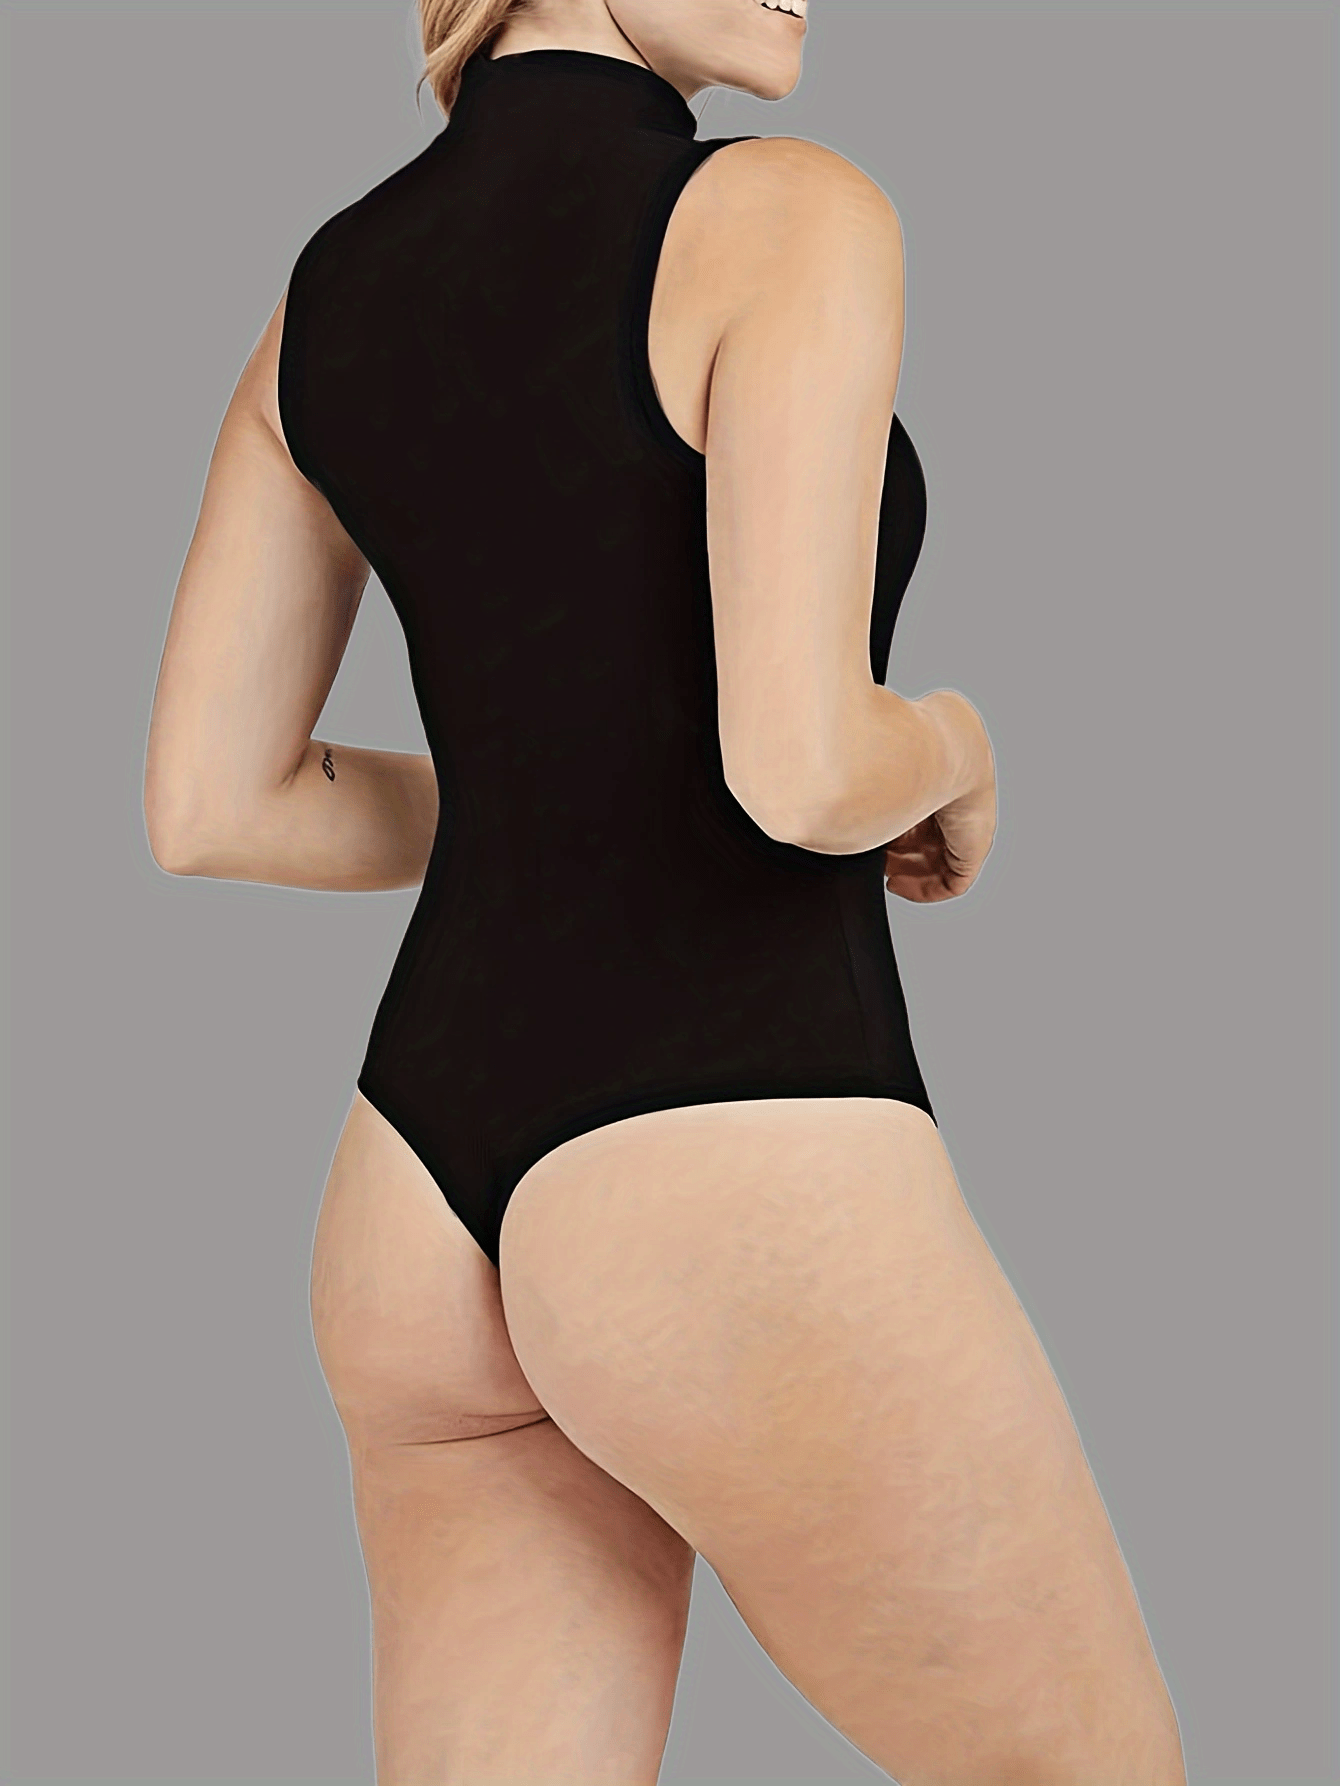 Body Woman Black Bodysuit Backless Bodysuits Summer Solid